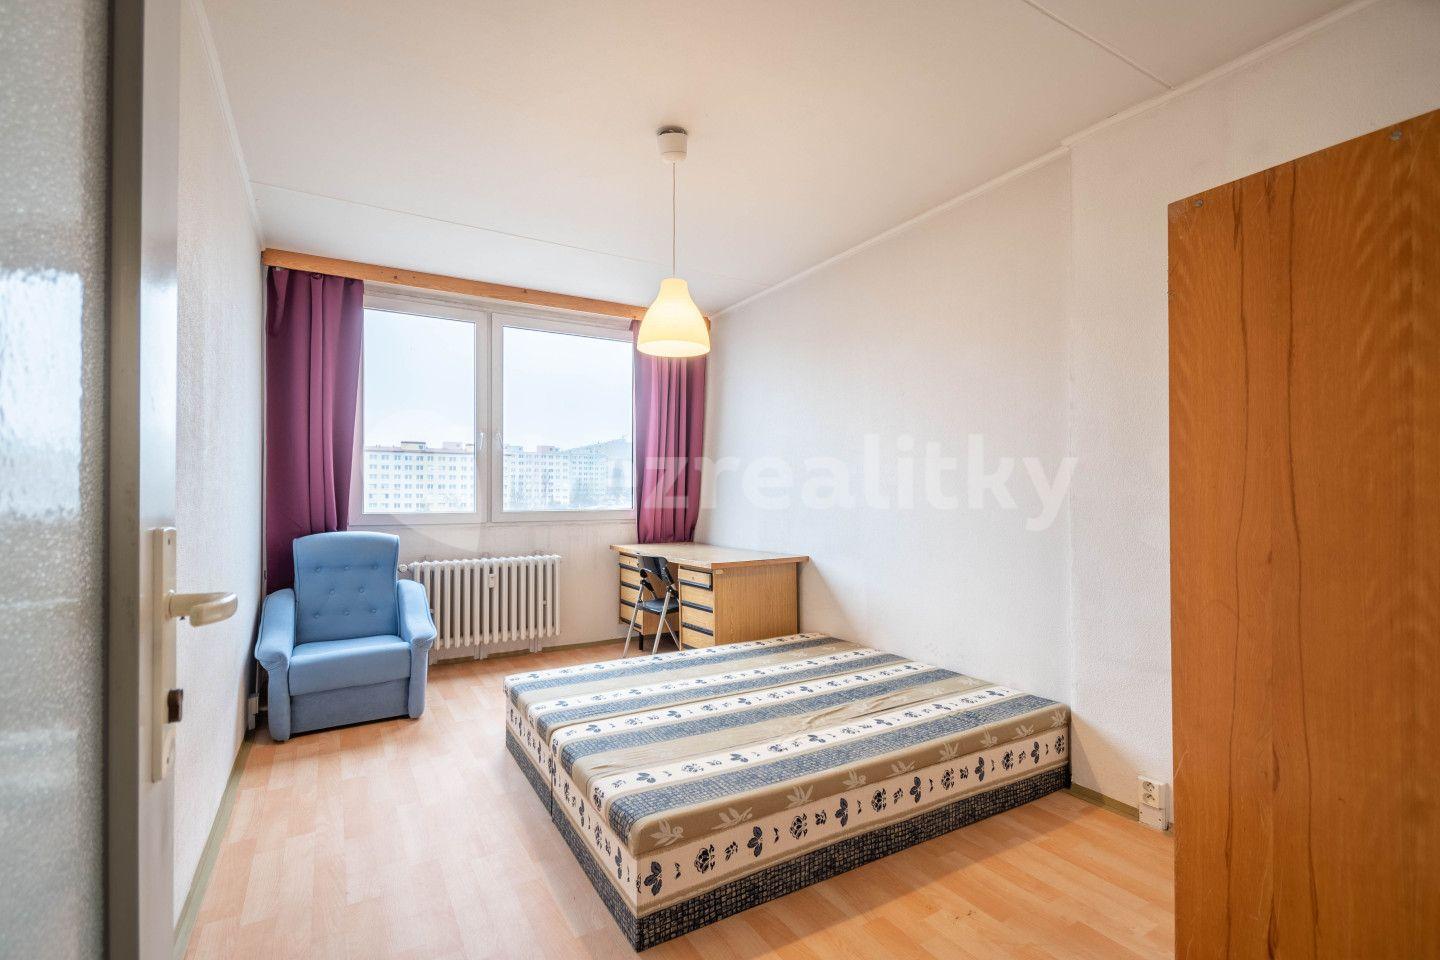 2 bedroom flat for sale, 40 m², Makovského, Prague, Prague